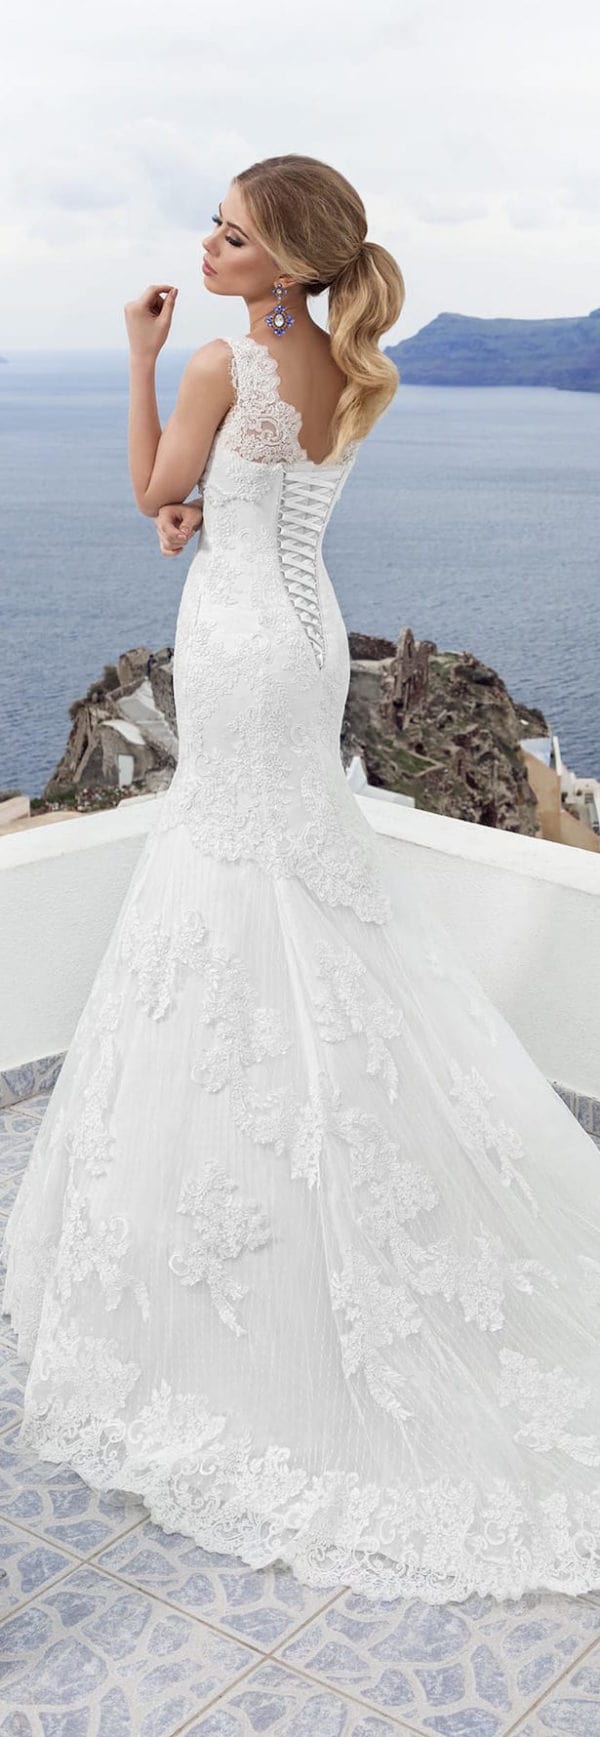 30 Lovely Ideas For Your Dream Wedding Dress